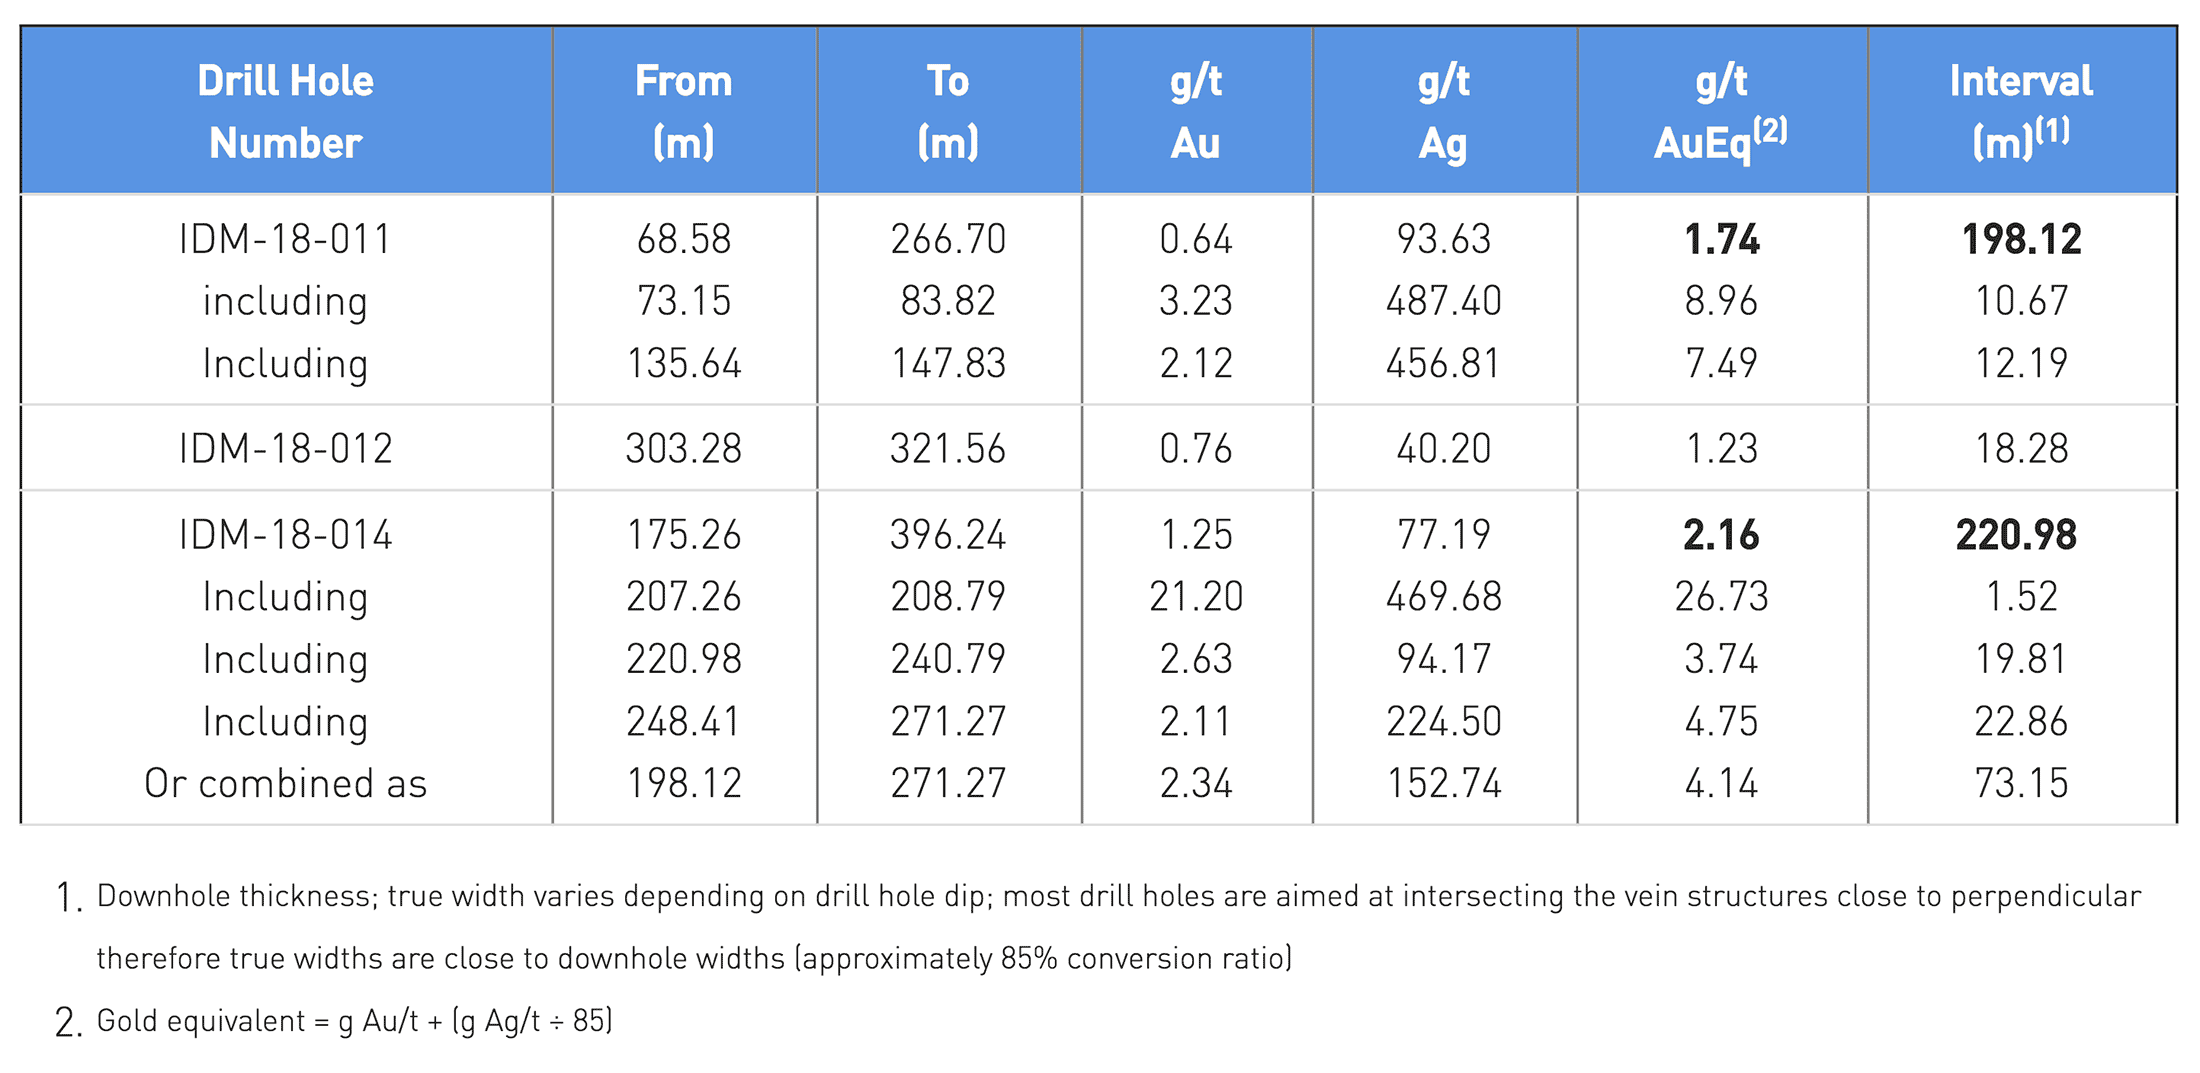 DeLamar Drill Results Summary